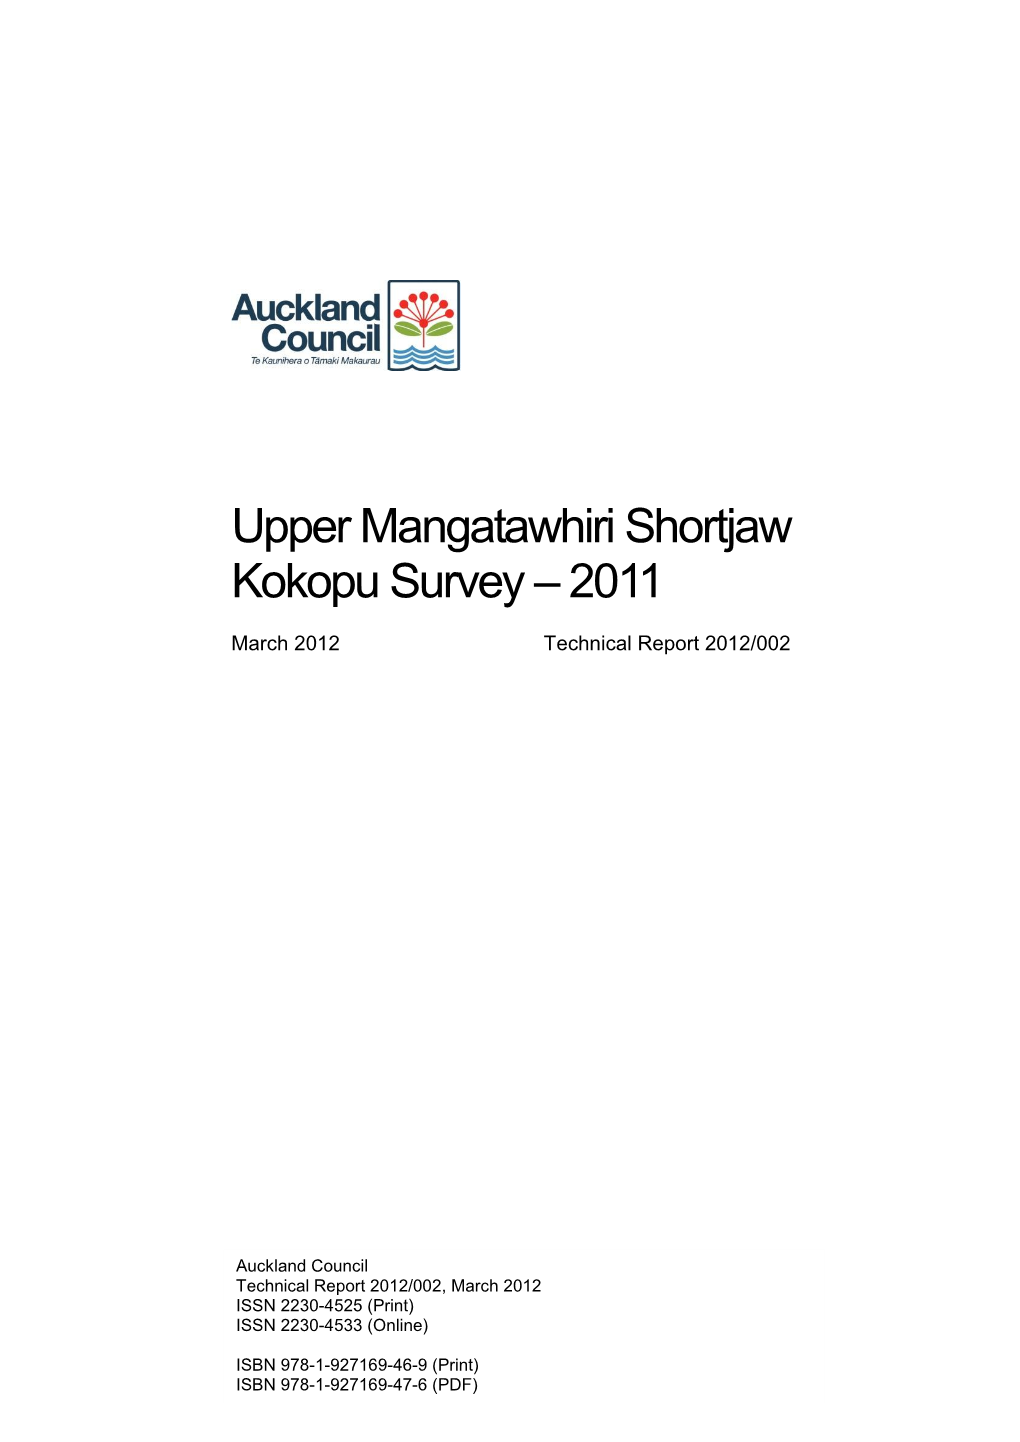 Upper Mangatawhiri Shortjaw Kokopu Survey – 2011